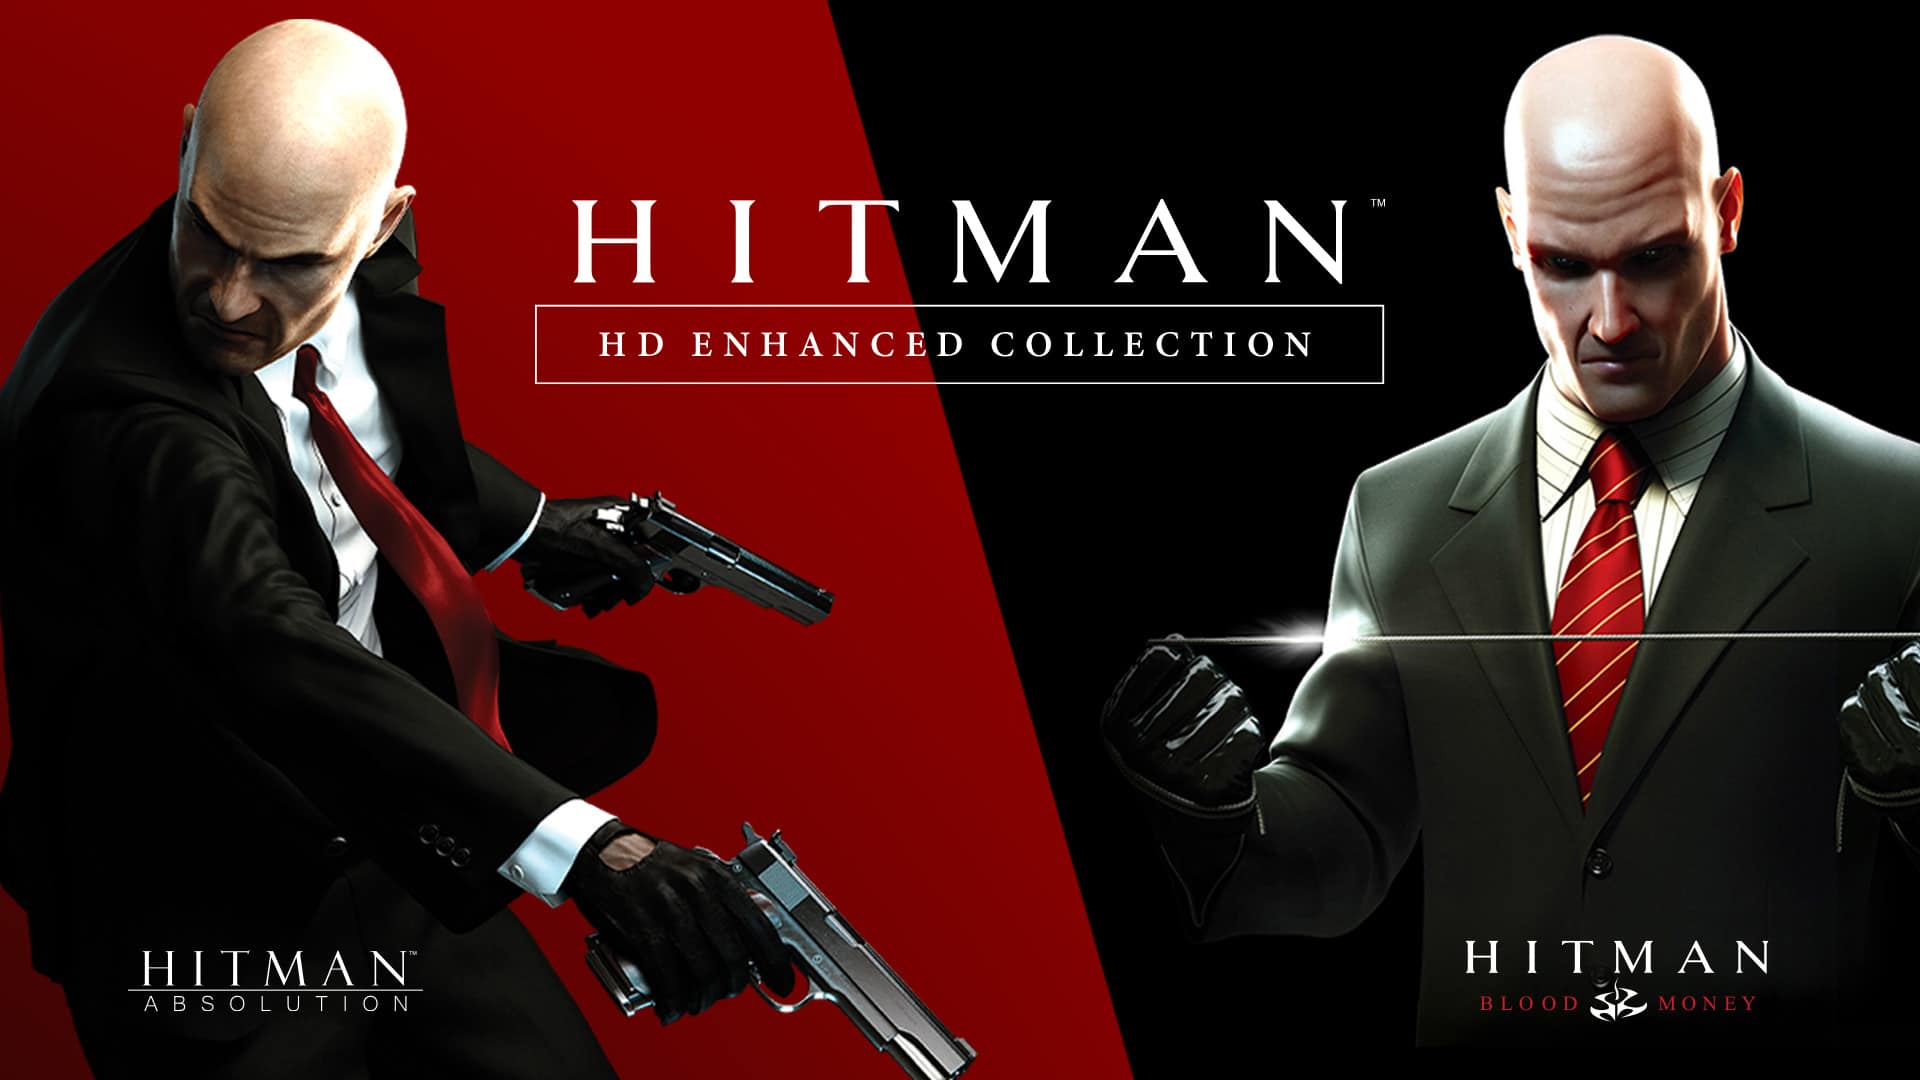 Hitman HD Enhanced Collection, PS4, Xbox One, Playstation 4,Warner Bros. Interactive Entertainment, IO Interactive, Hitman Blood Money, Hitman Absolution, GamersRD